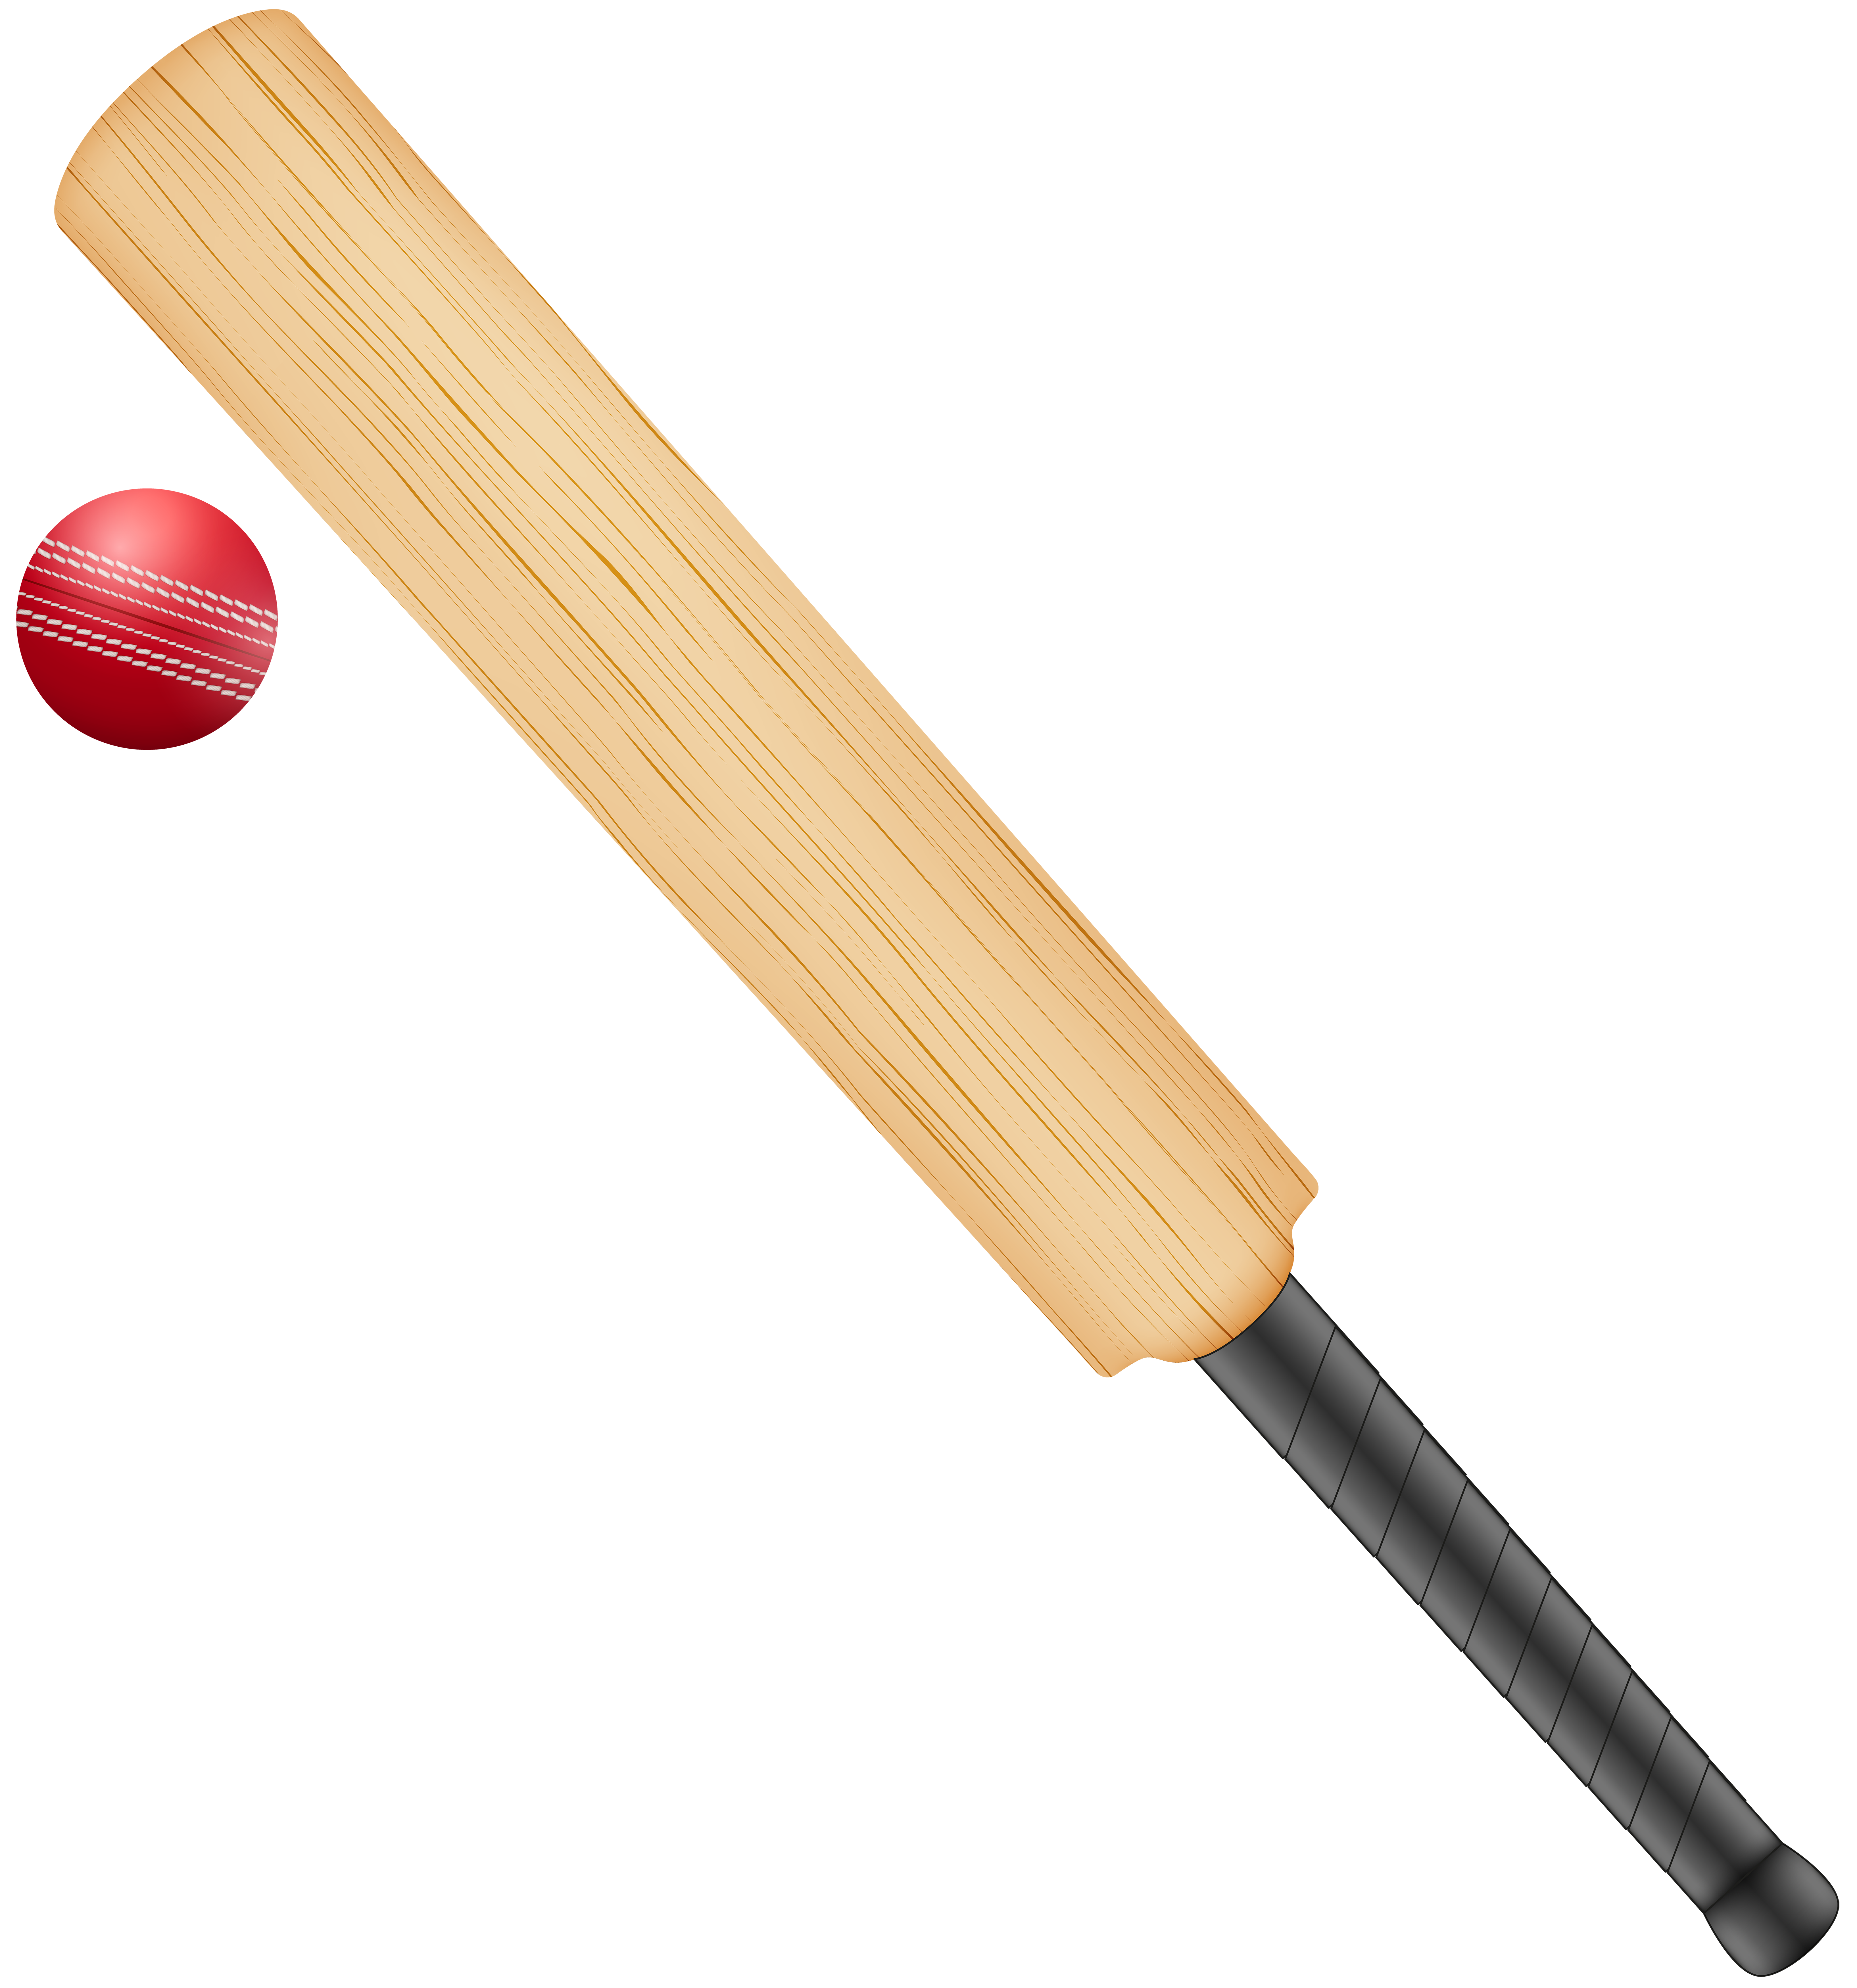 Image file formats lossless. Cricket clipart cricket batting